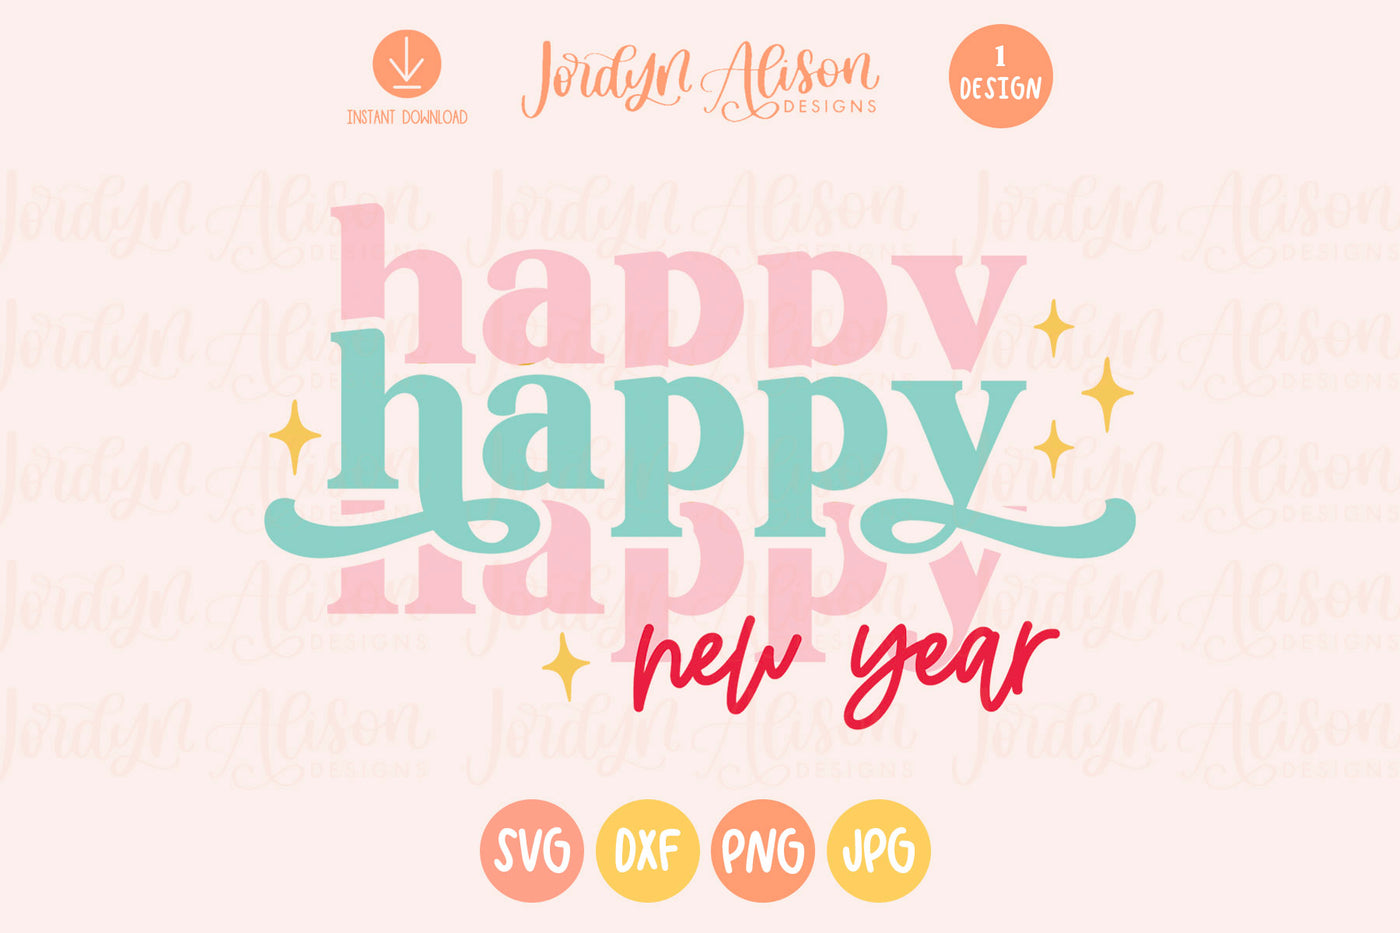 Happy New Year SVG